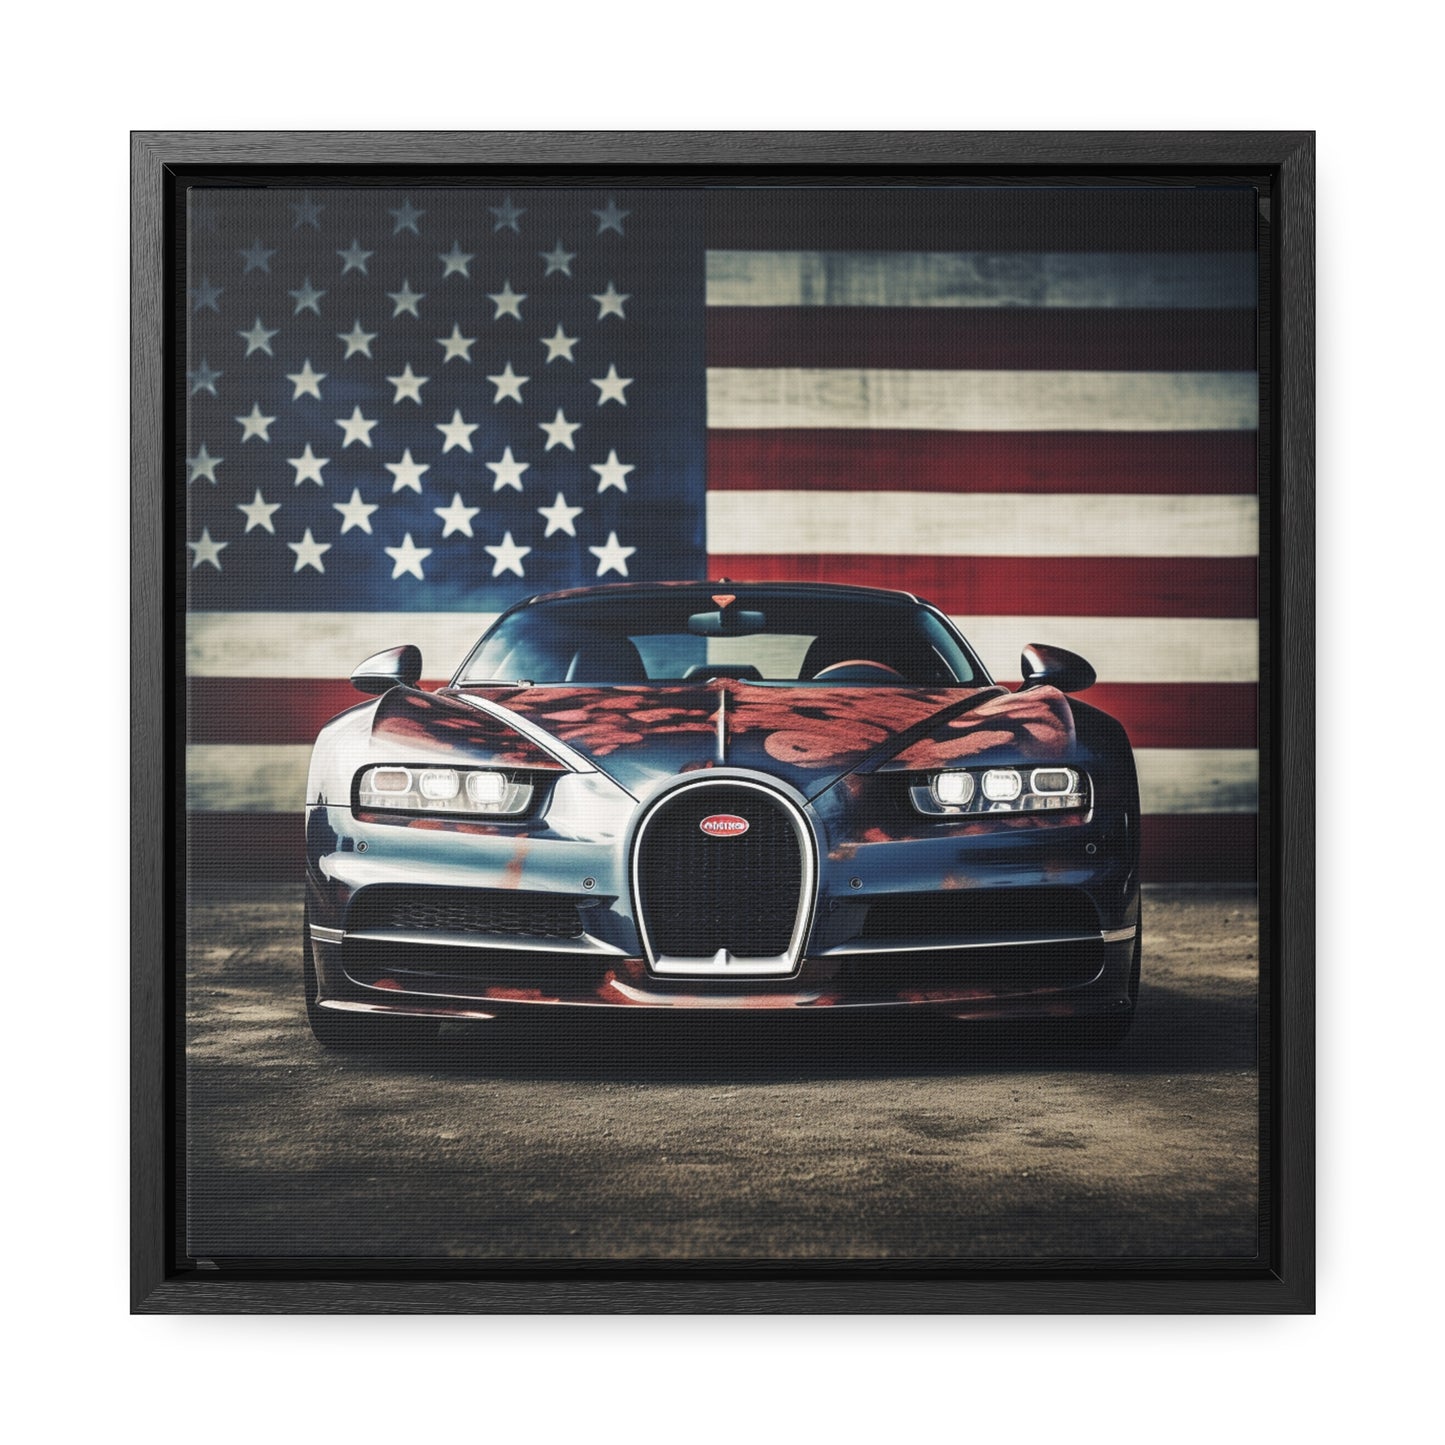 Gallery Canvas Wraps, Square Frame Bugatti Flag 3